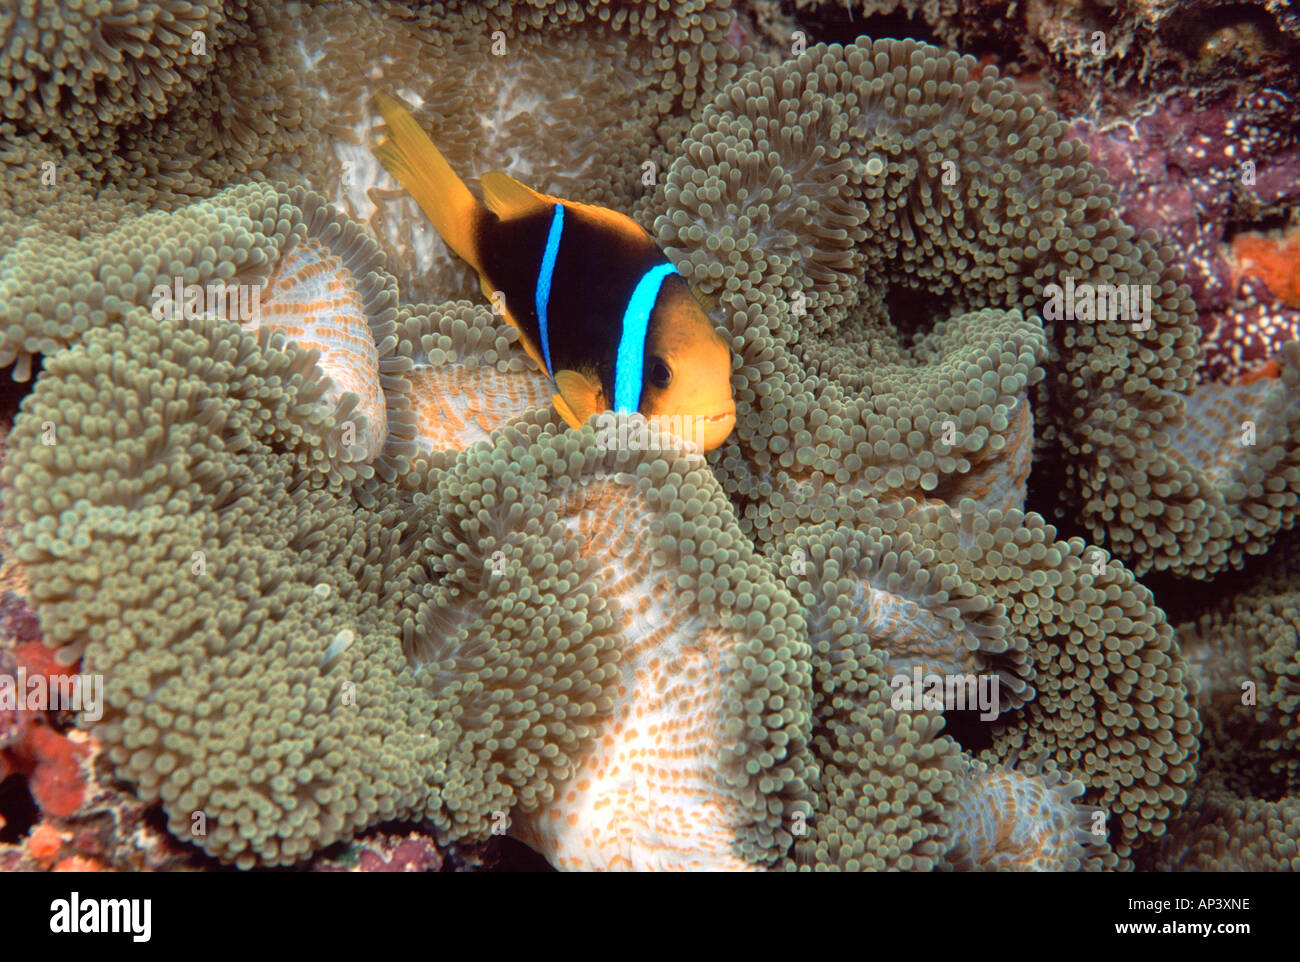 South Pacific, Orange-fin Anemonefish in Mertens' Sea Anemone Stock Photo